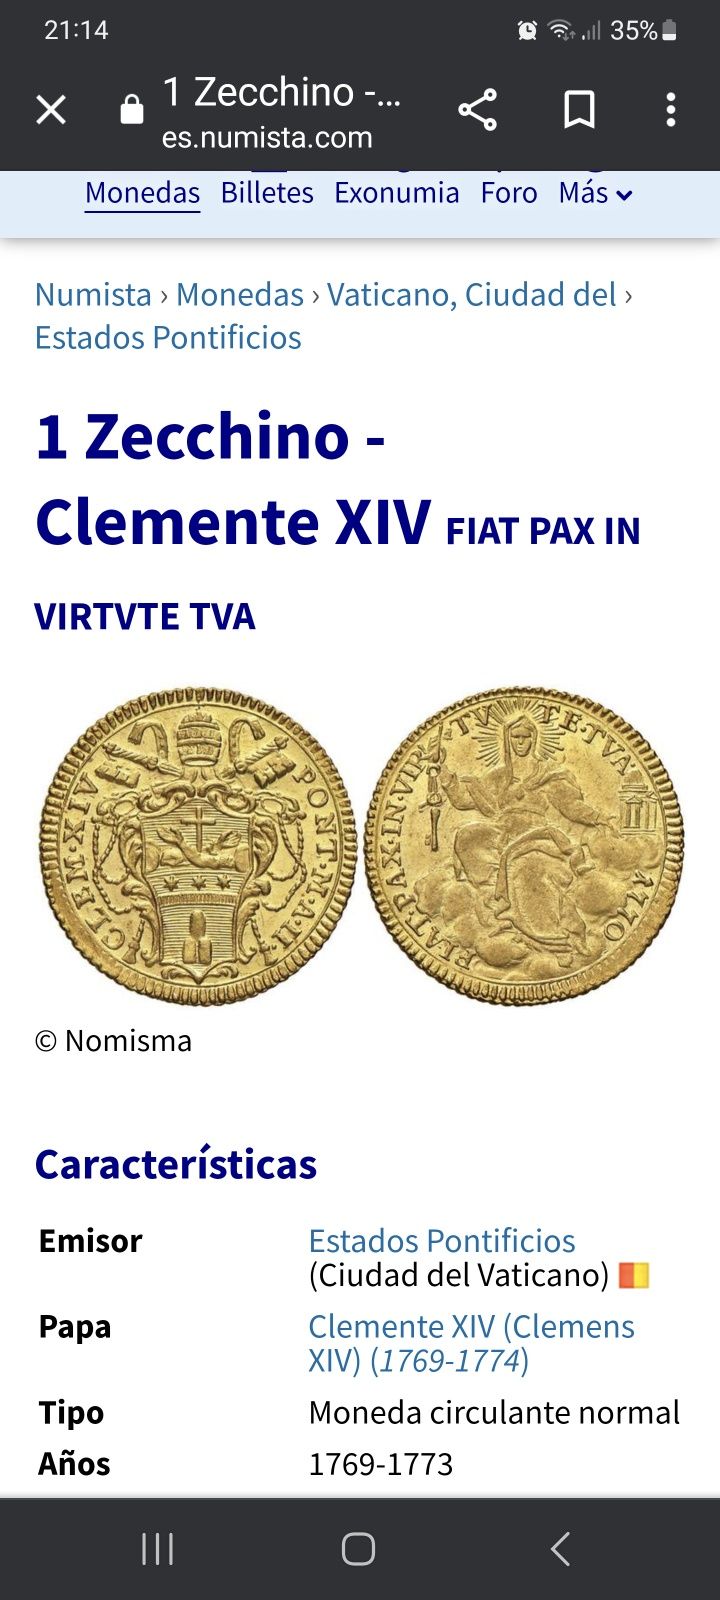 1 Zecchino - Clemente XIV FIAT PAX IN